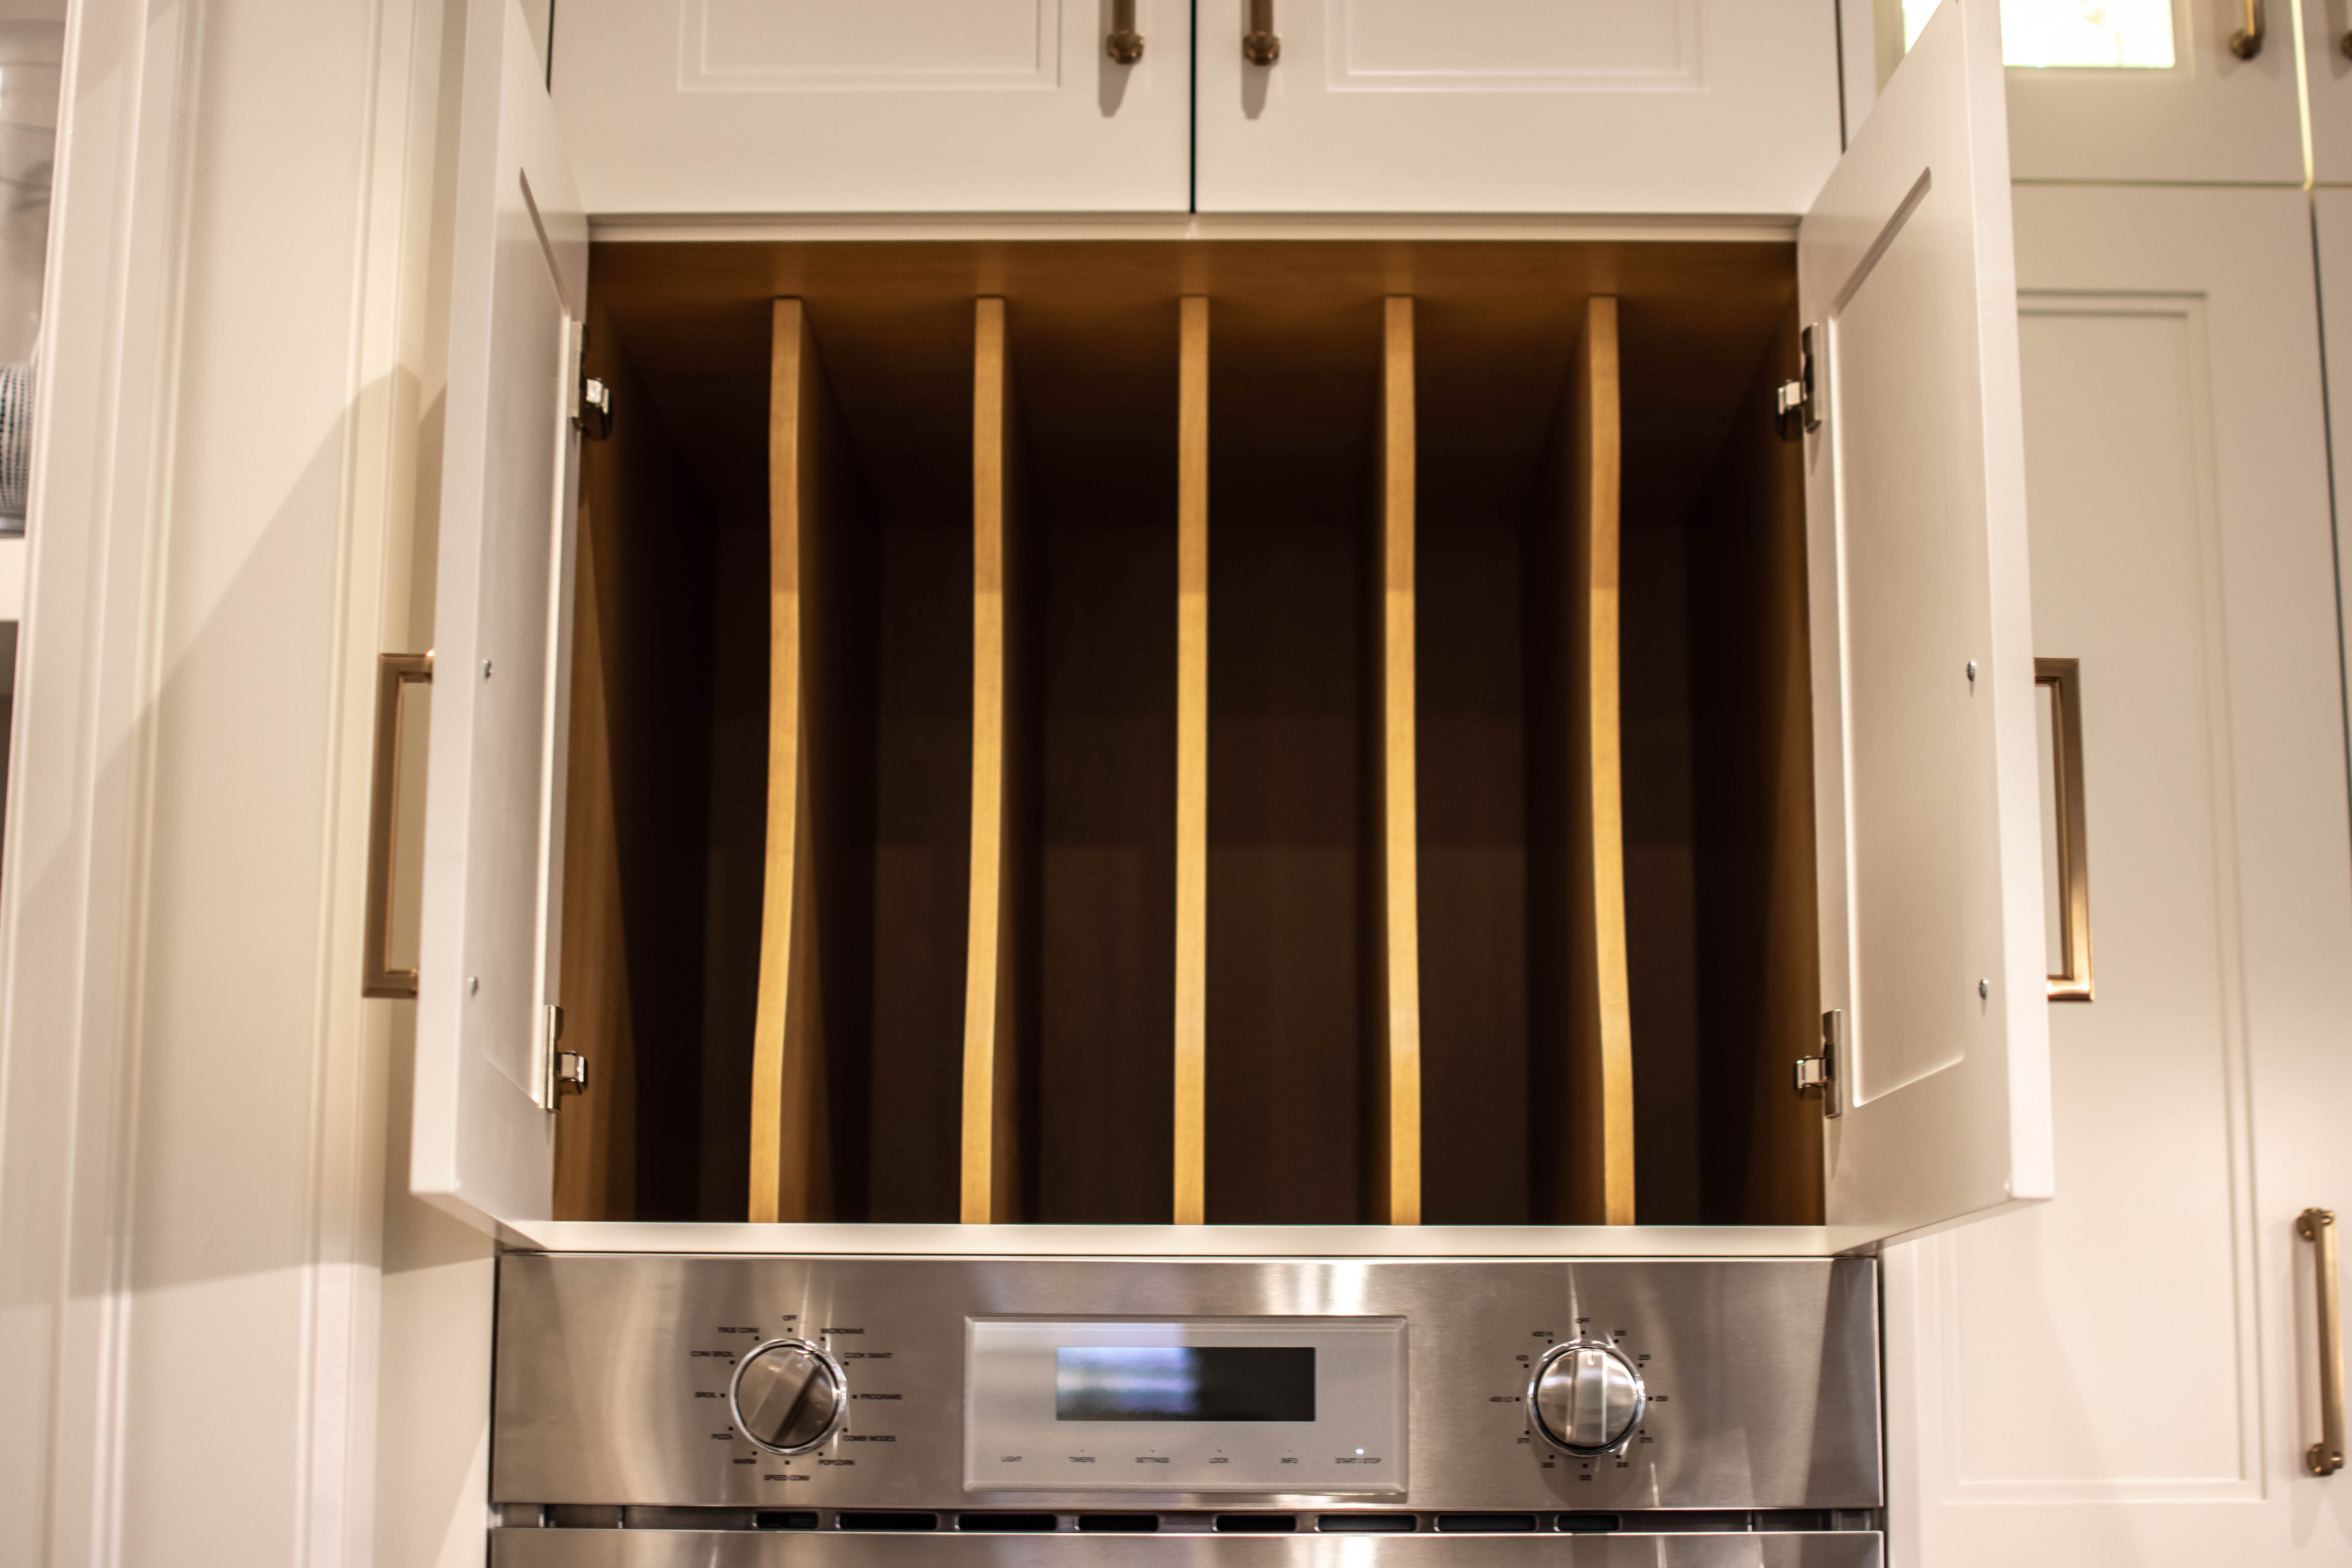 10 Types of Storage You Need in Your Next Kitchen | Chervin Kitchen & Bath | Klondike Homes Model Home Kitchen